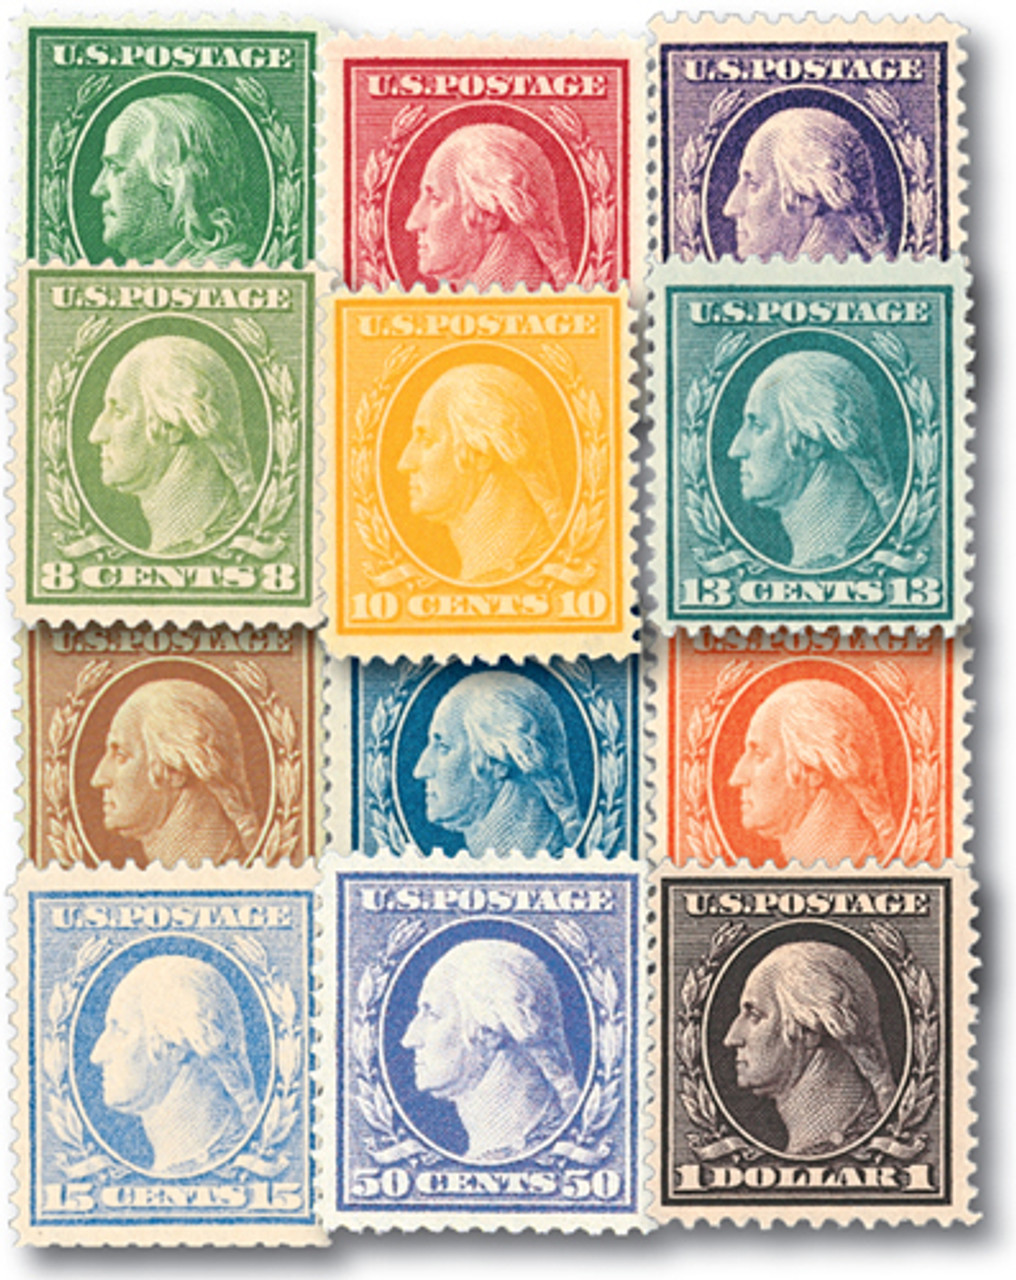 Second Bureau Issues (1902-1908)